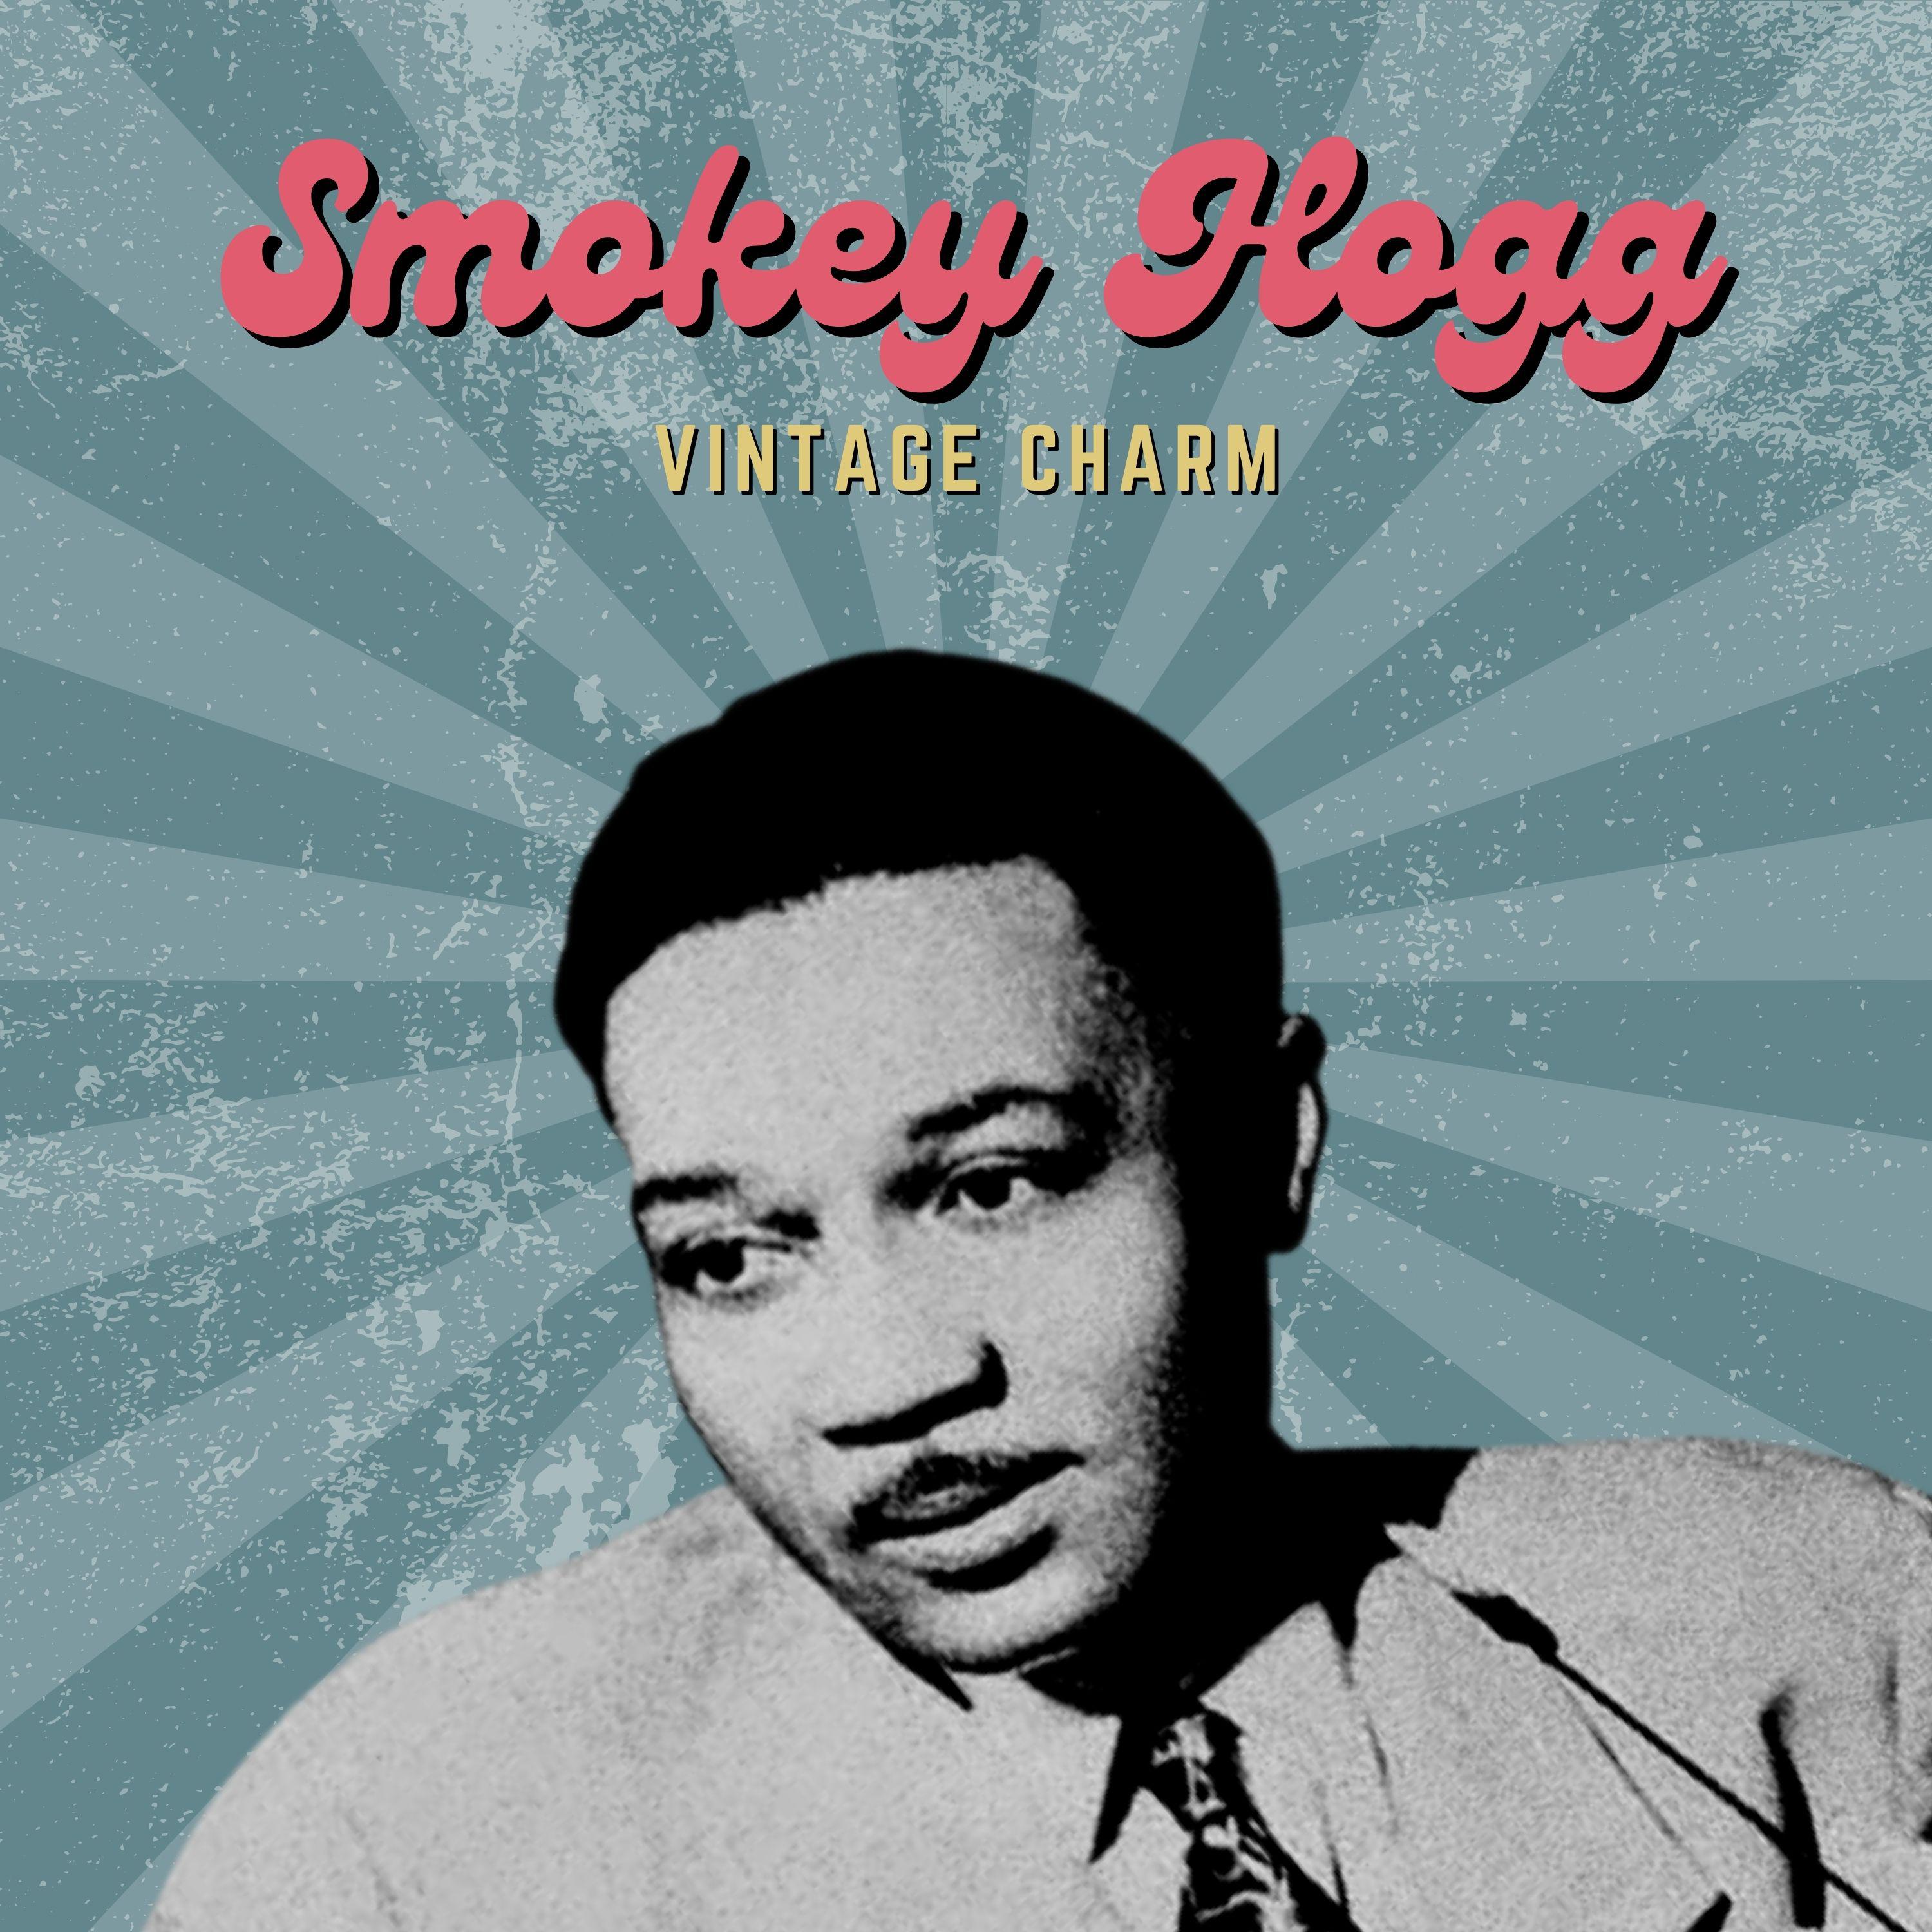 Smokey Hogg - I Love You Baby